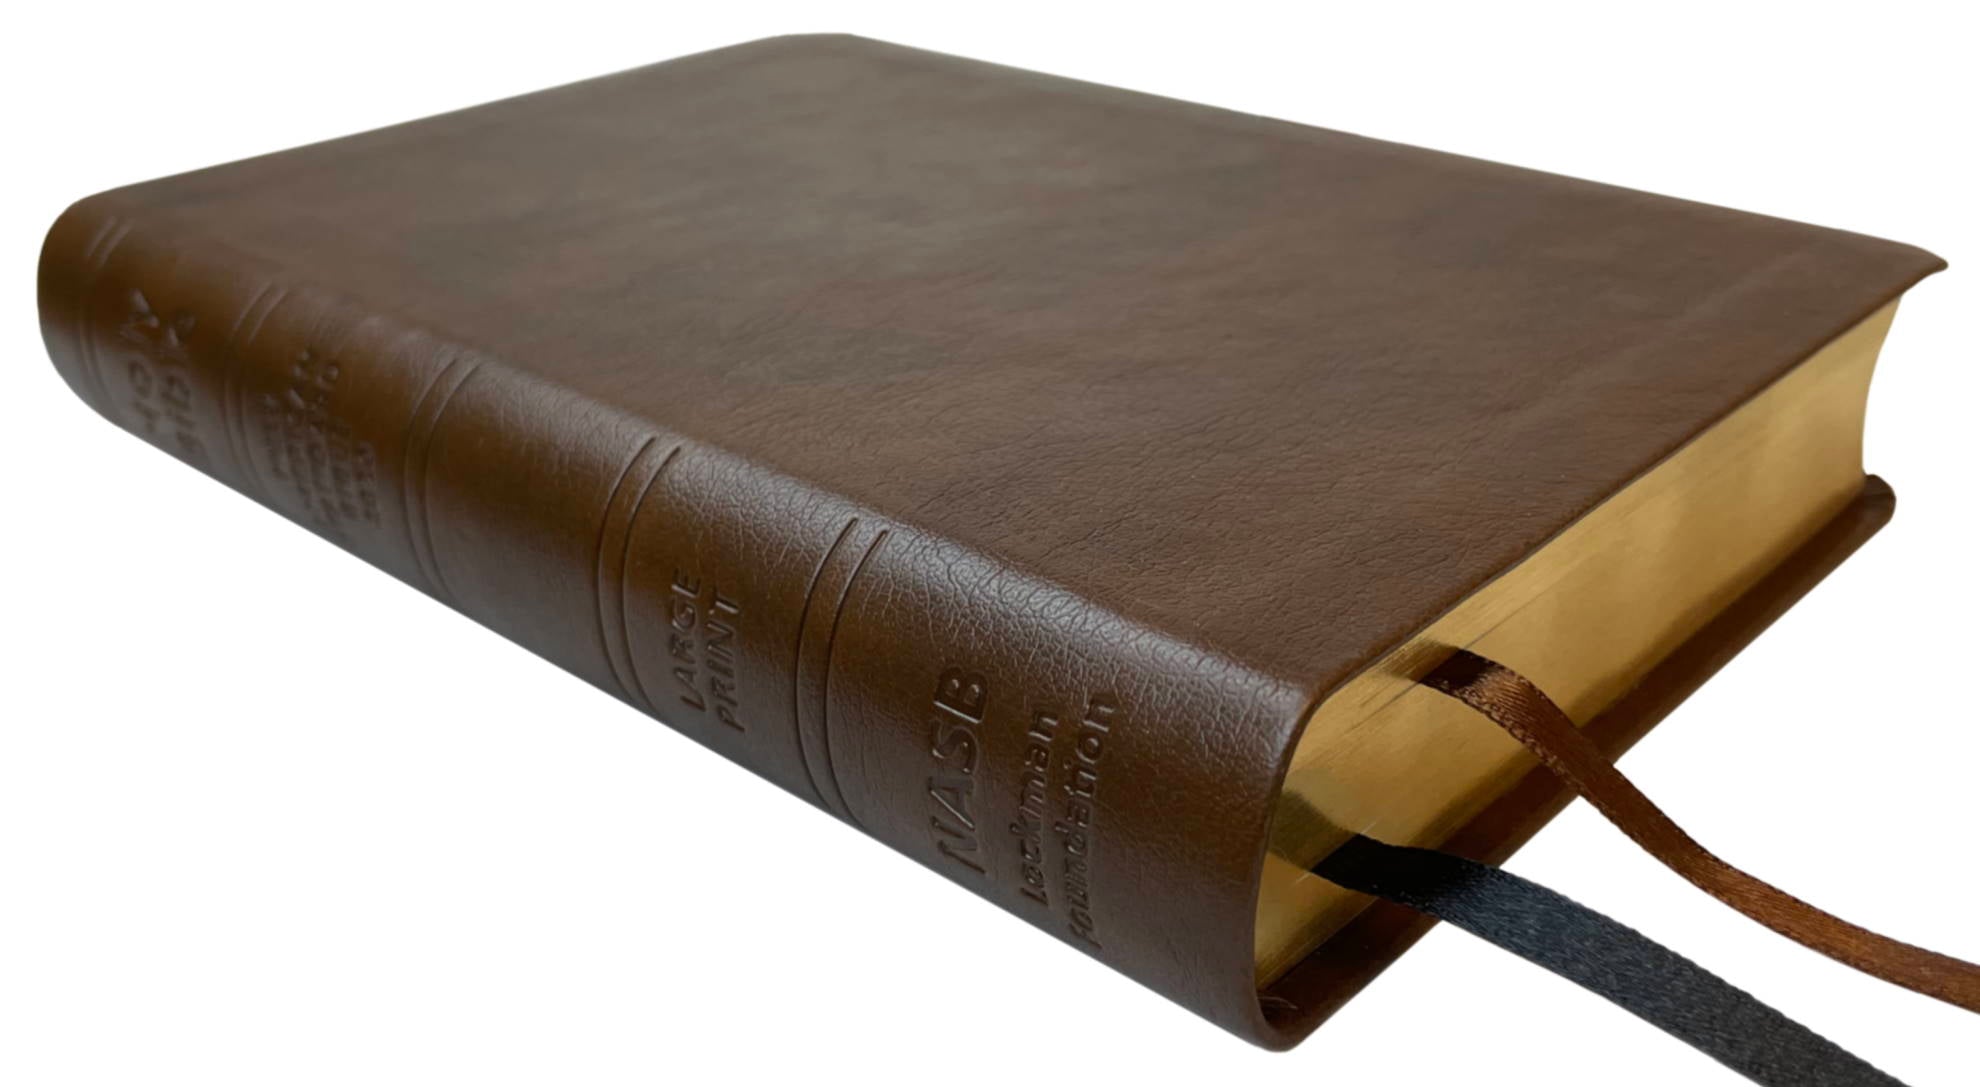 NASB 2020 Large Print Compact Bible